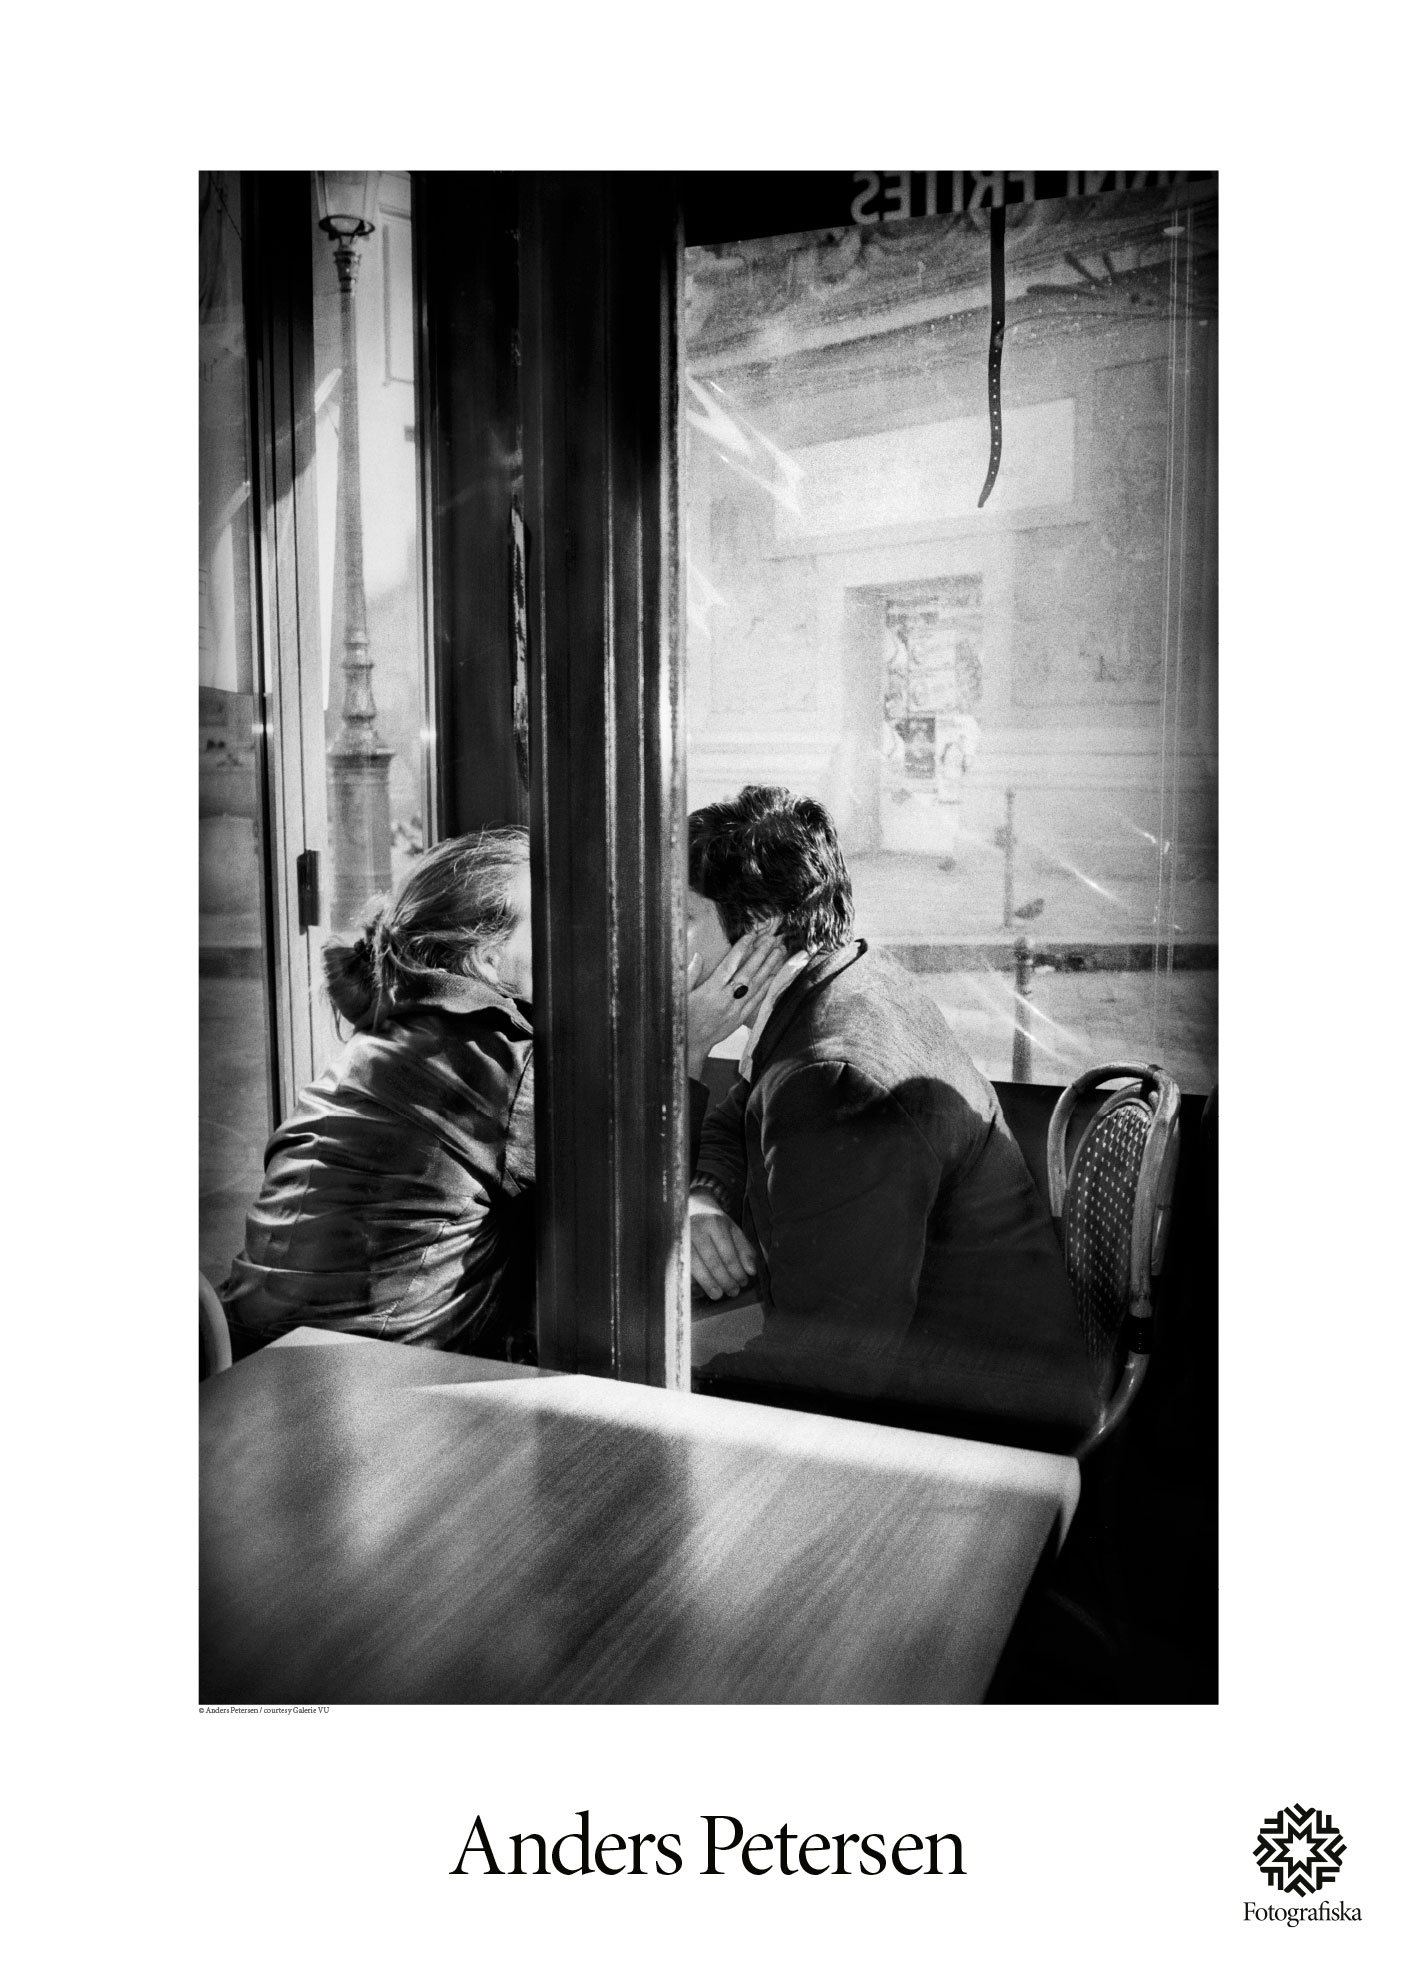 Anders Petersen, Café #4841